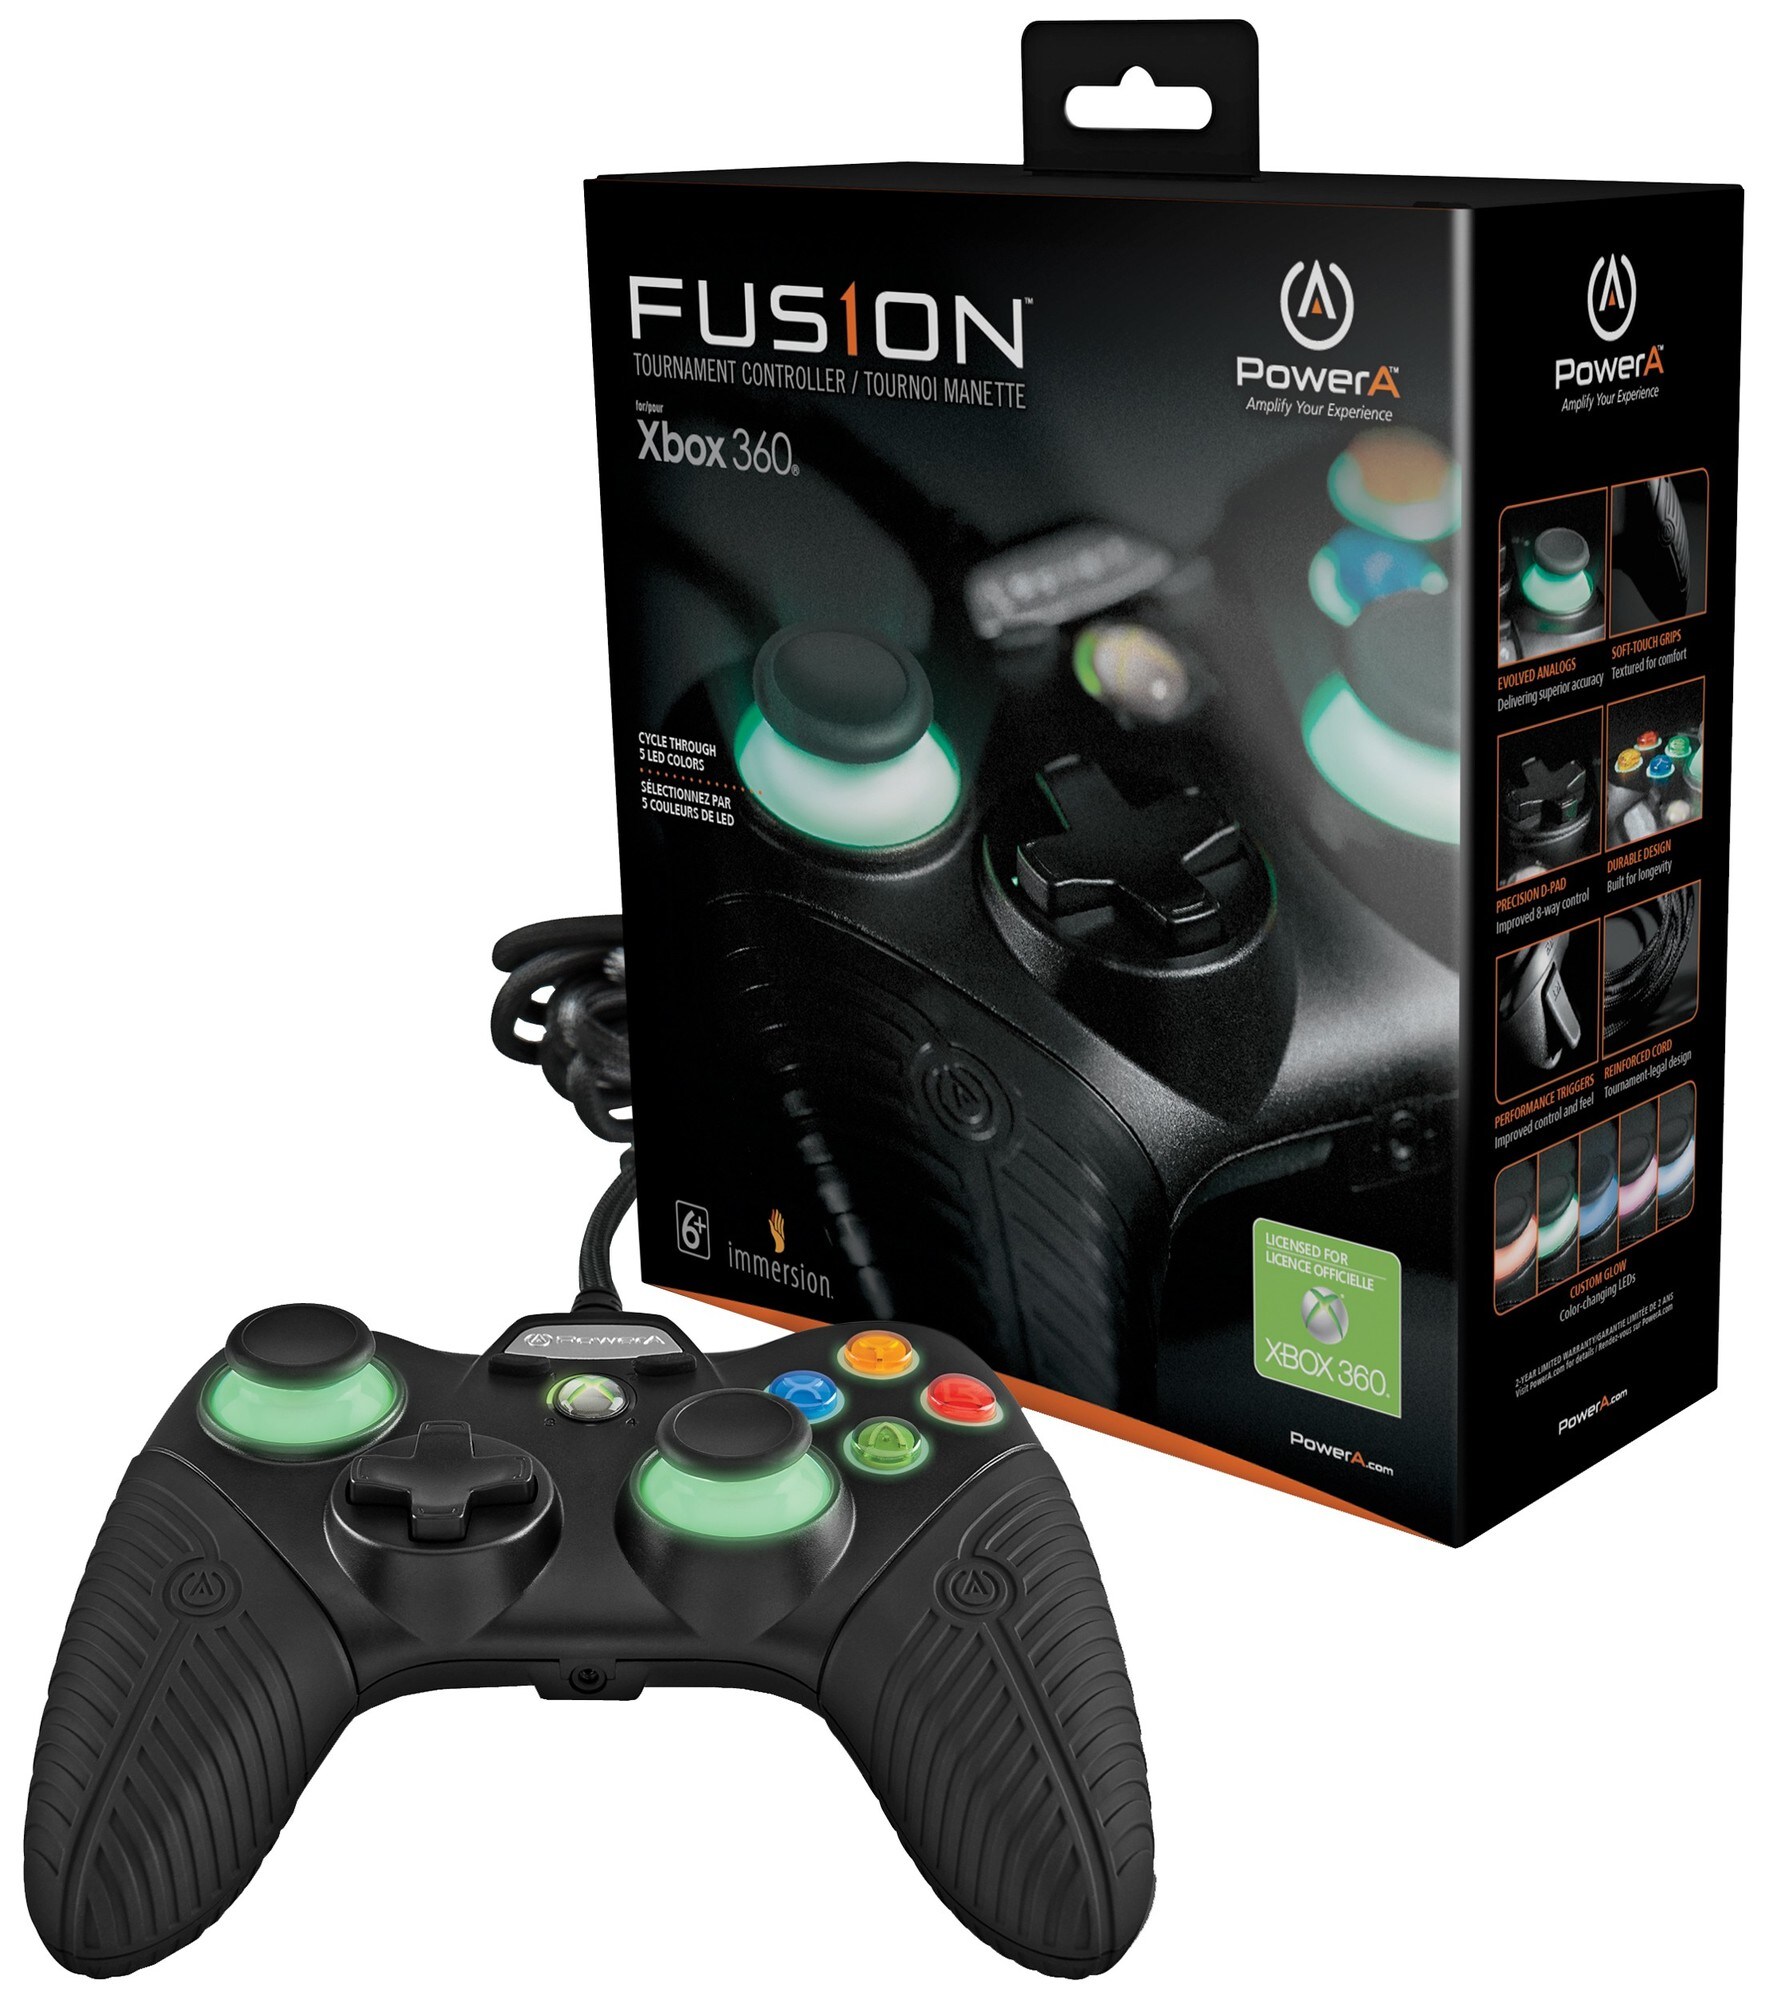 PowerA Fusion Tournament controller - X360 - Xbox - controllere og tilbehør  - Elgiganten